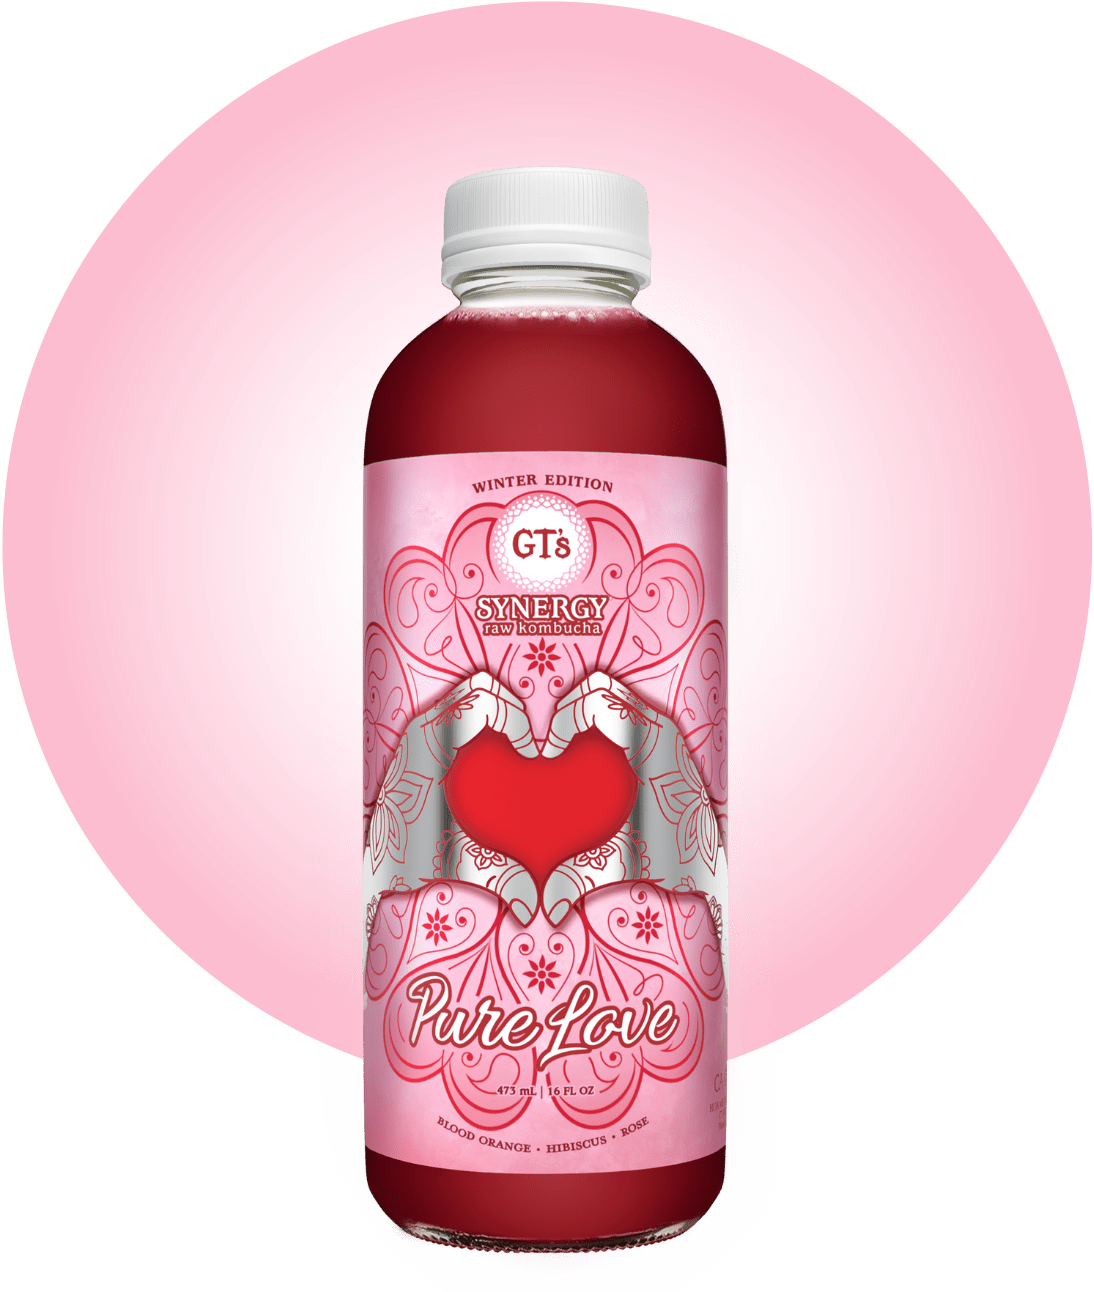 GT's SYNERGY Raw Kombucha Pure Love Bottle